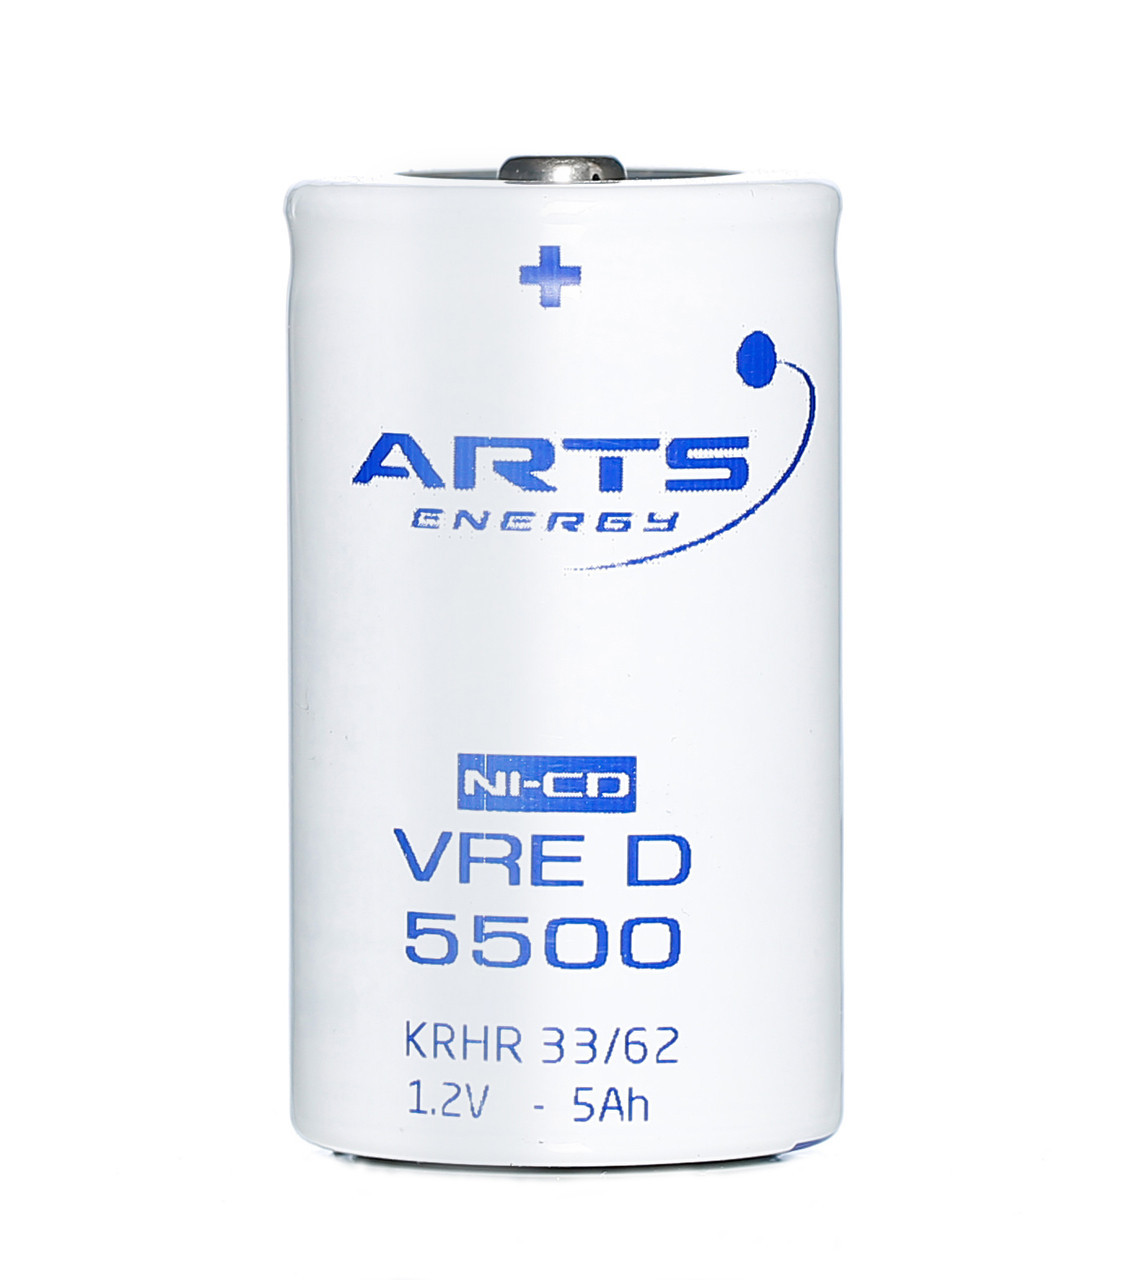 VRE D KRHR 33/62 Arts Energy D Size 5500mah NIcd Battery Flat Top